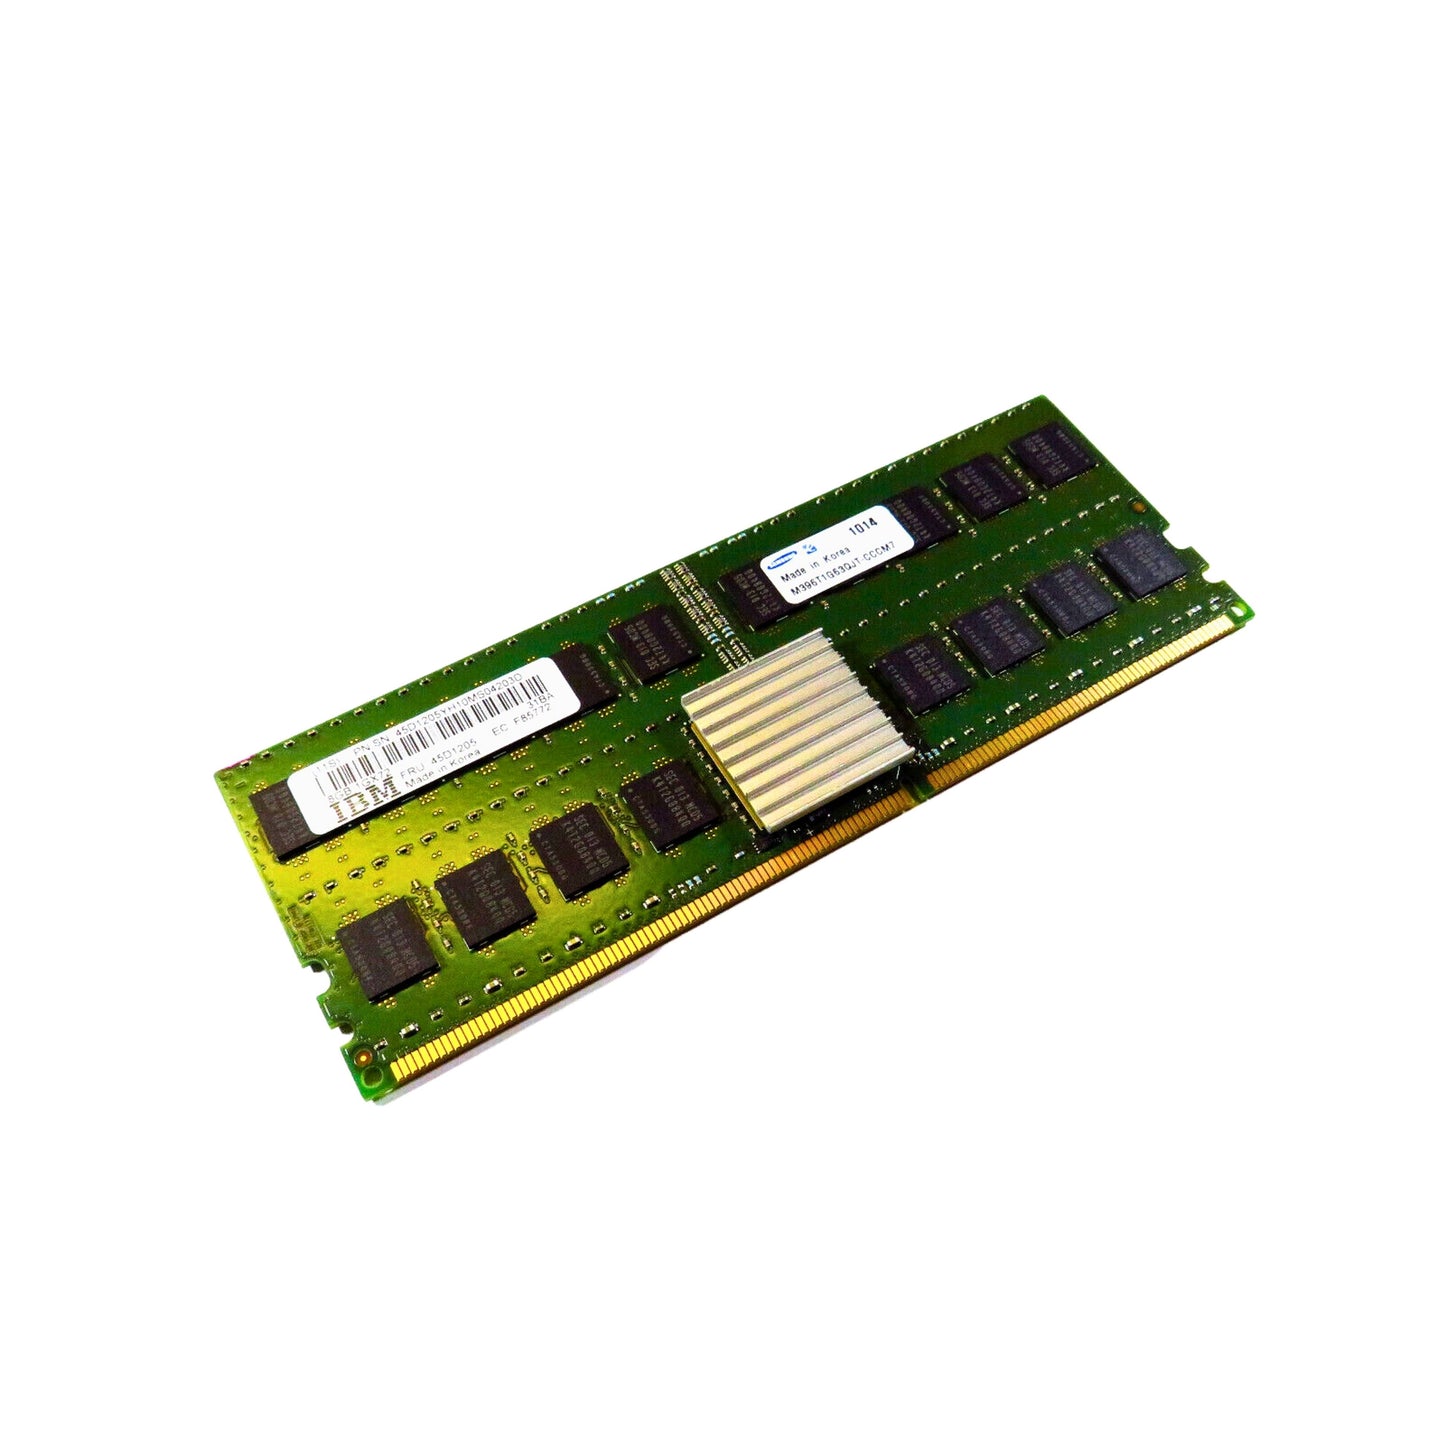 IBM 45D1205 31BA M396T1G63QJT 8GB 1GX72 Power 6 DDR2 DIMM Server Memory (Refurbished)